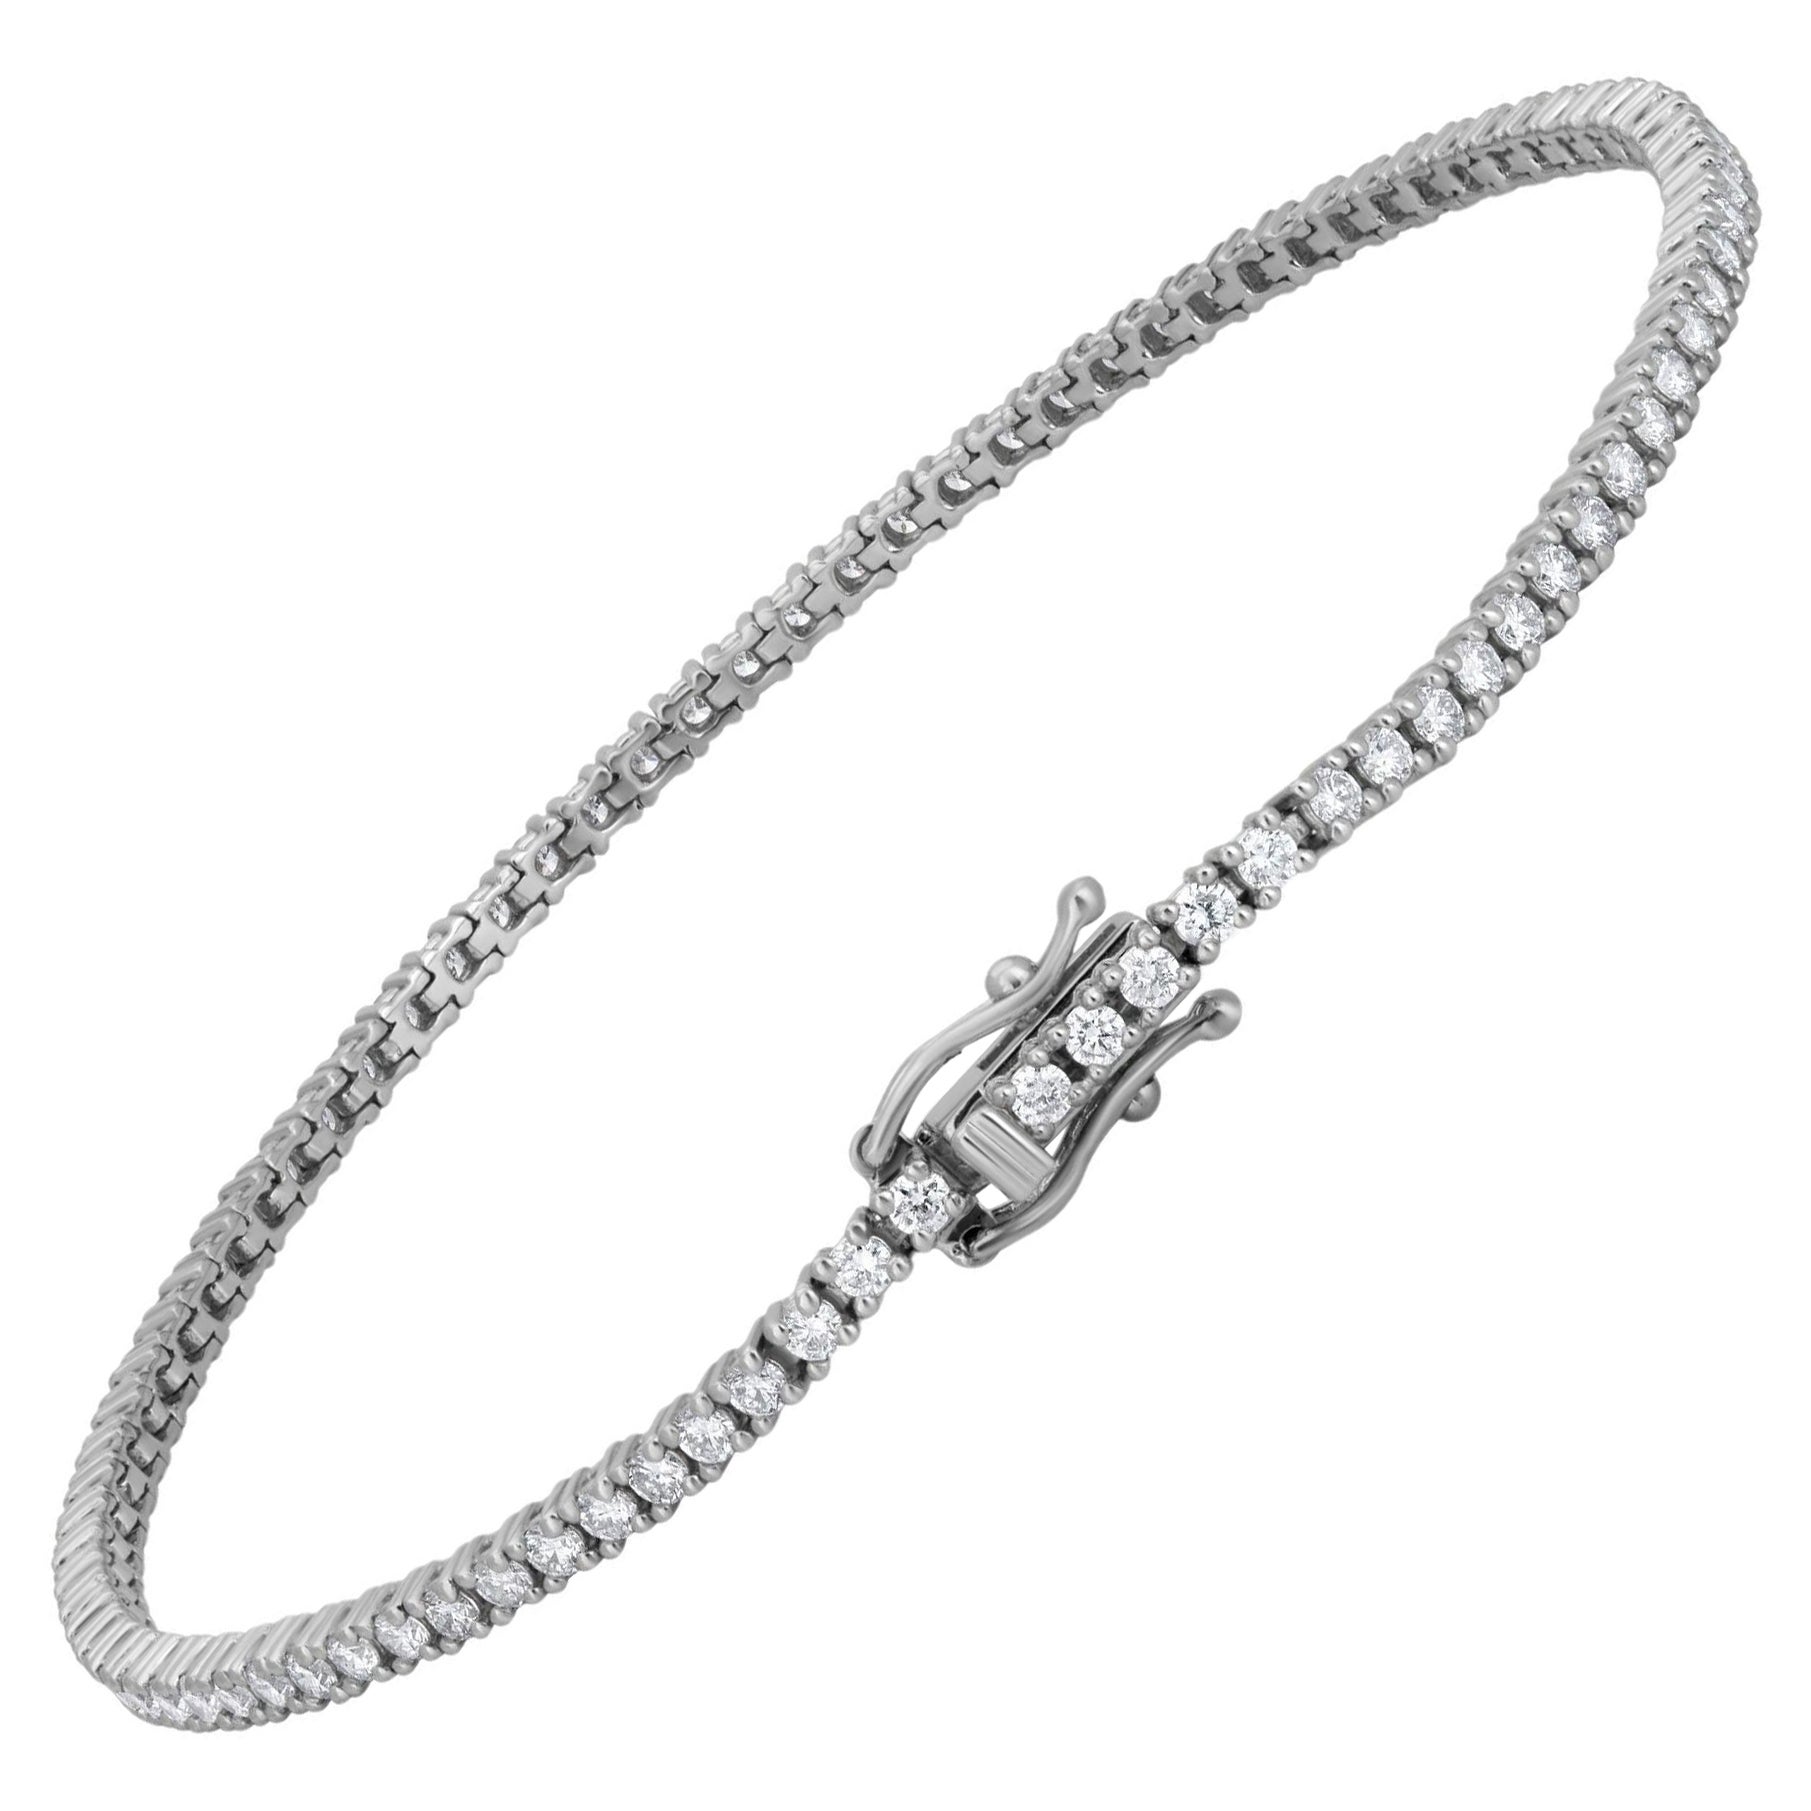 Luxle 1.6cttw. Round Diamond Tennis Bracelet in 18k White Gold For Sale